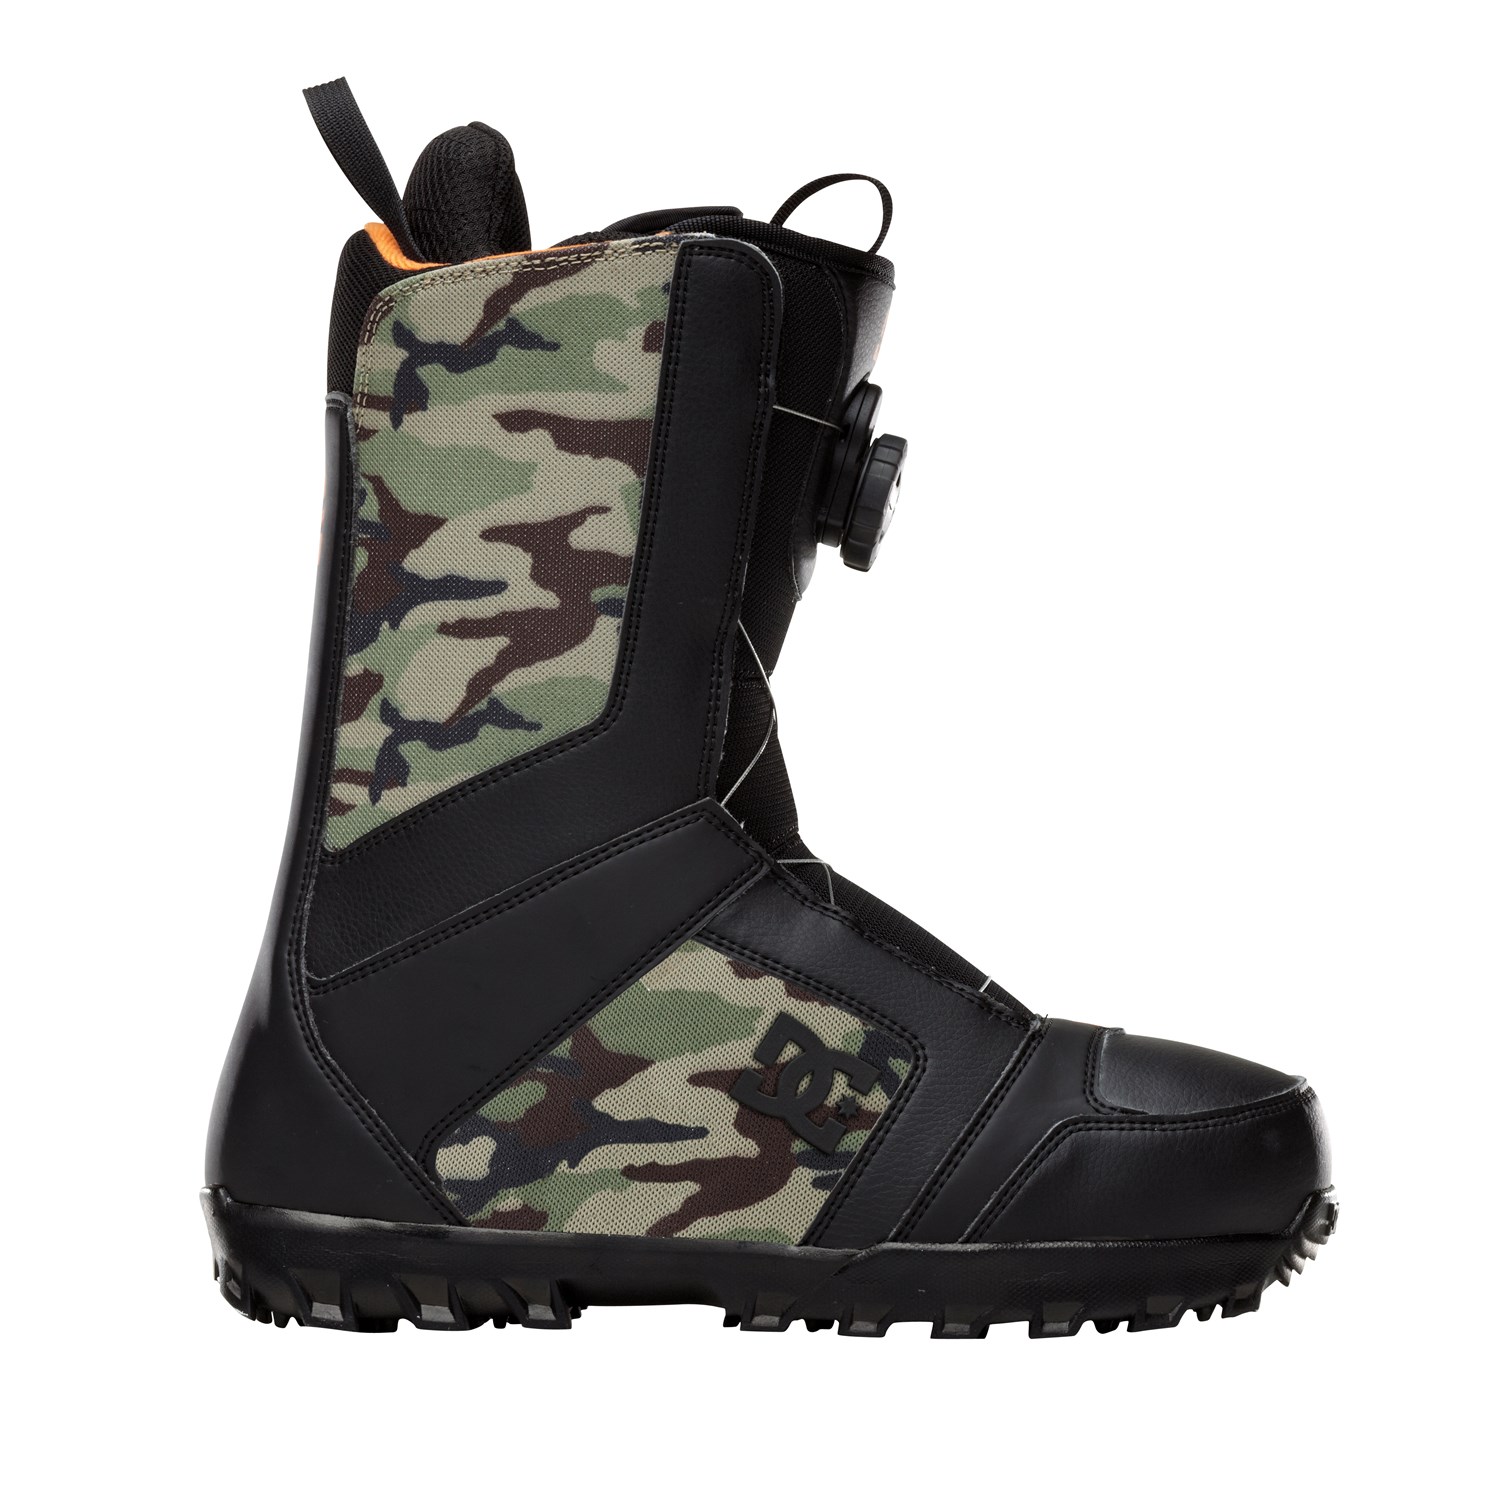 dc camo snowboard boots, OFF 77%,Cheap 